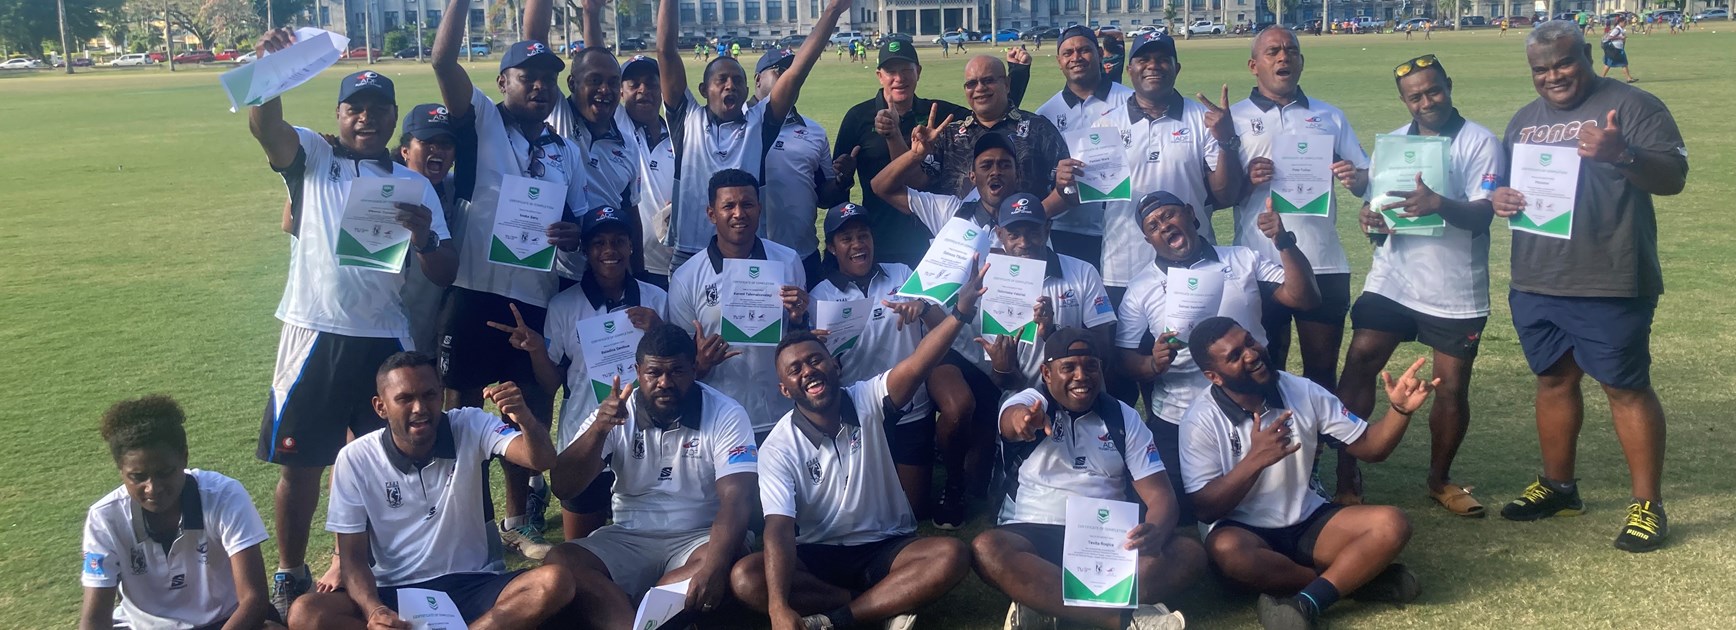 NRL community programs reach new heights in Fiji